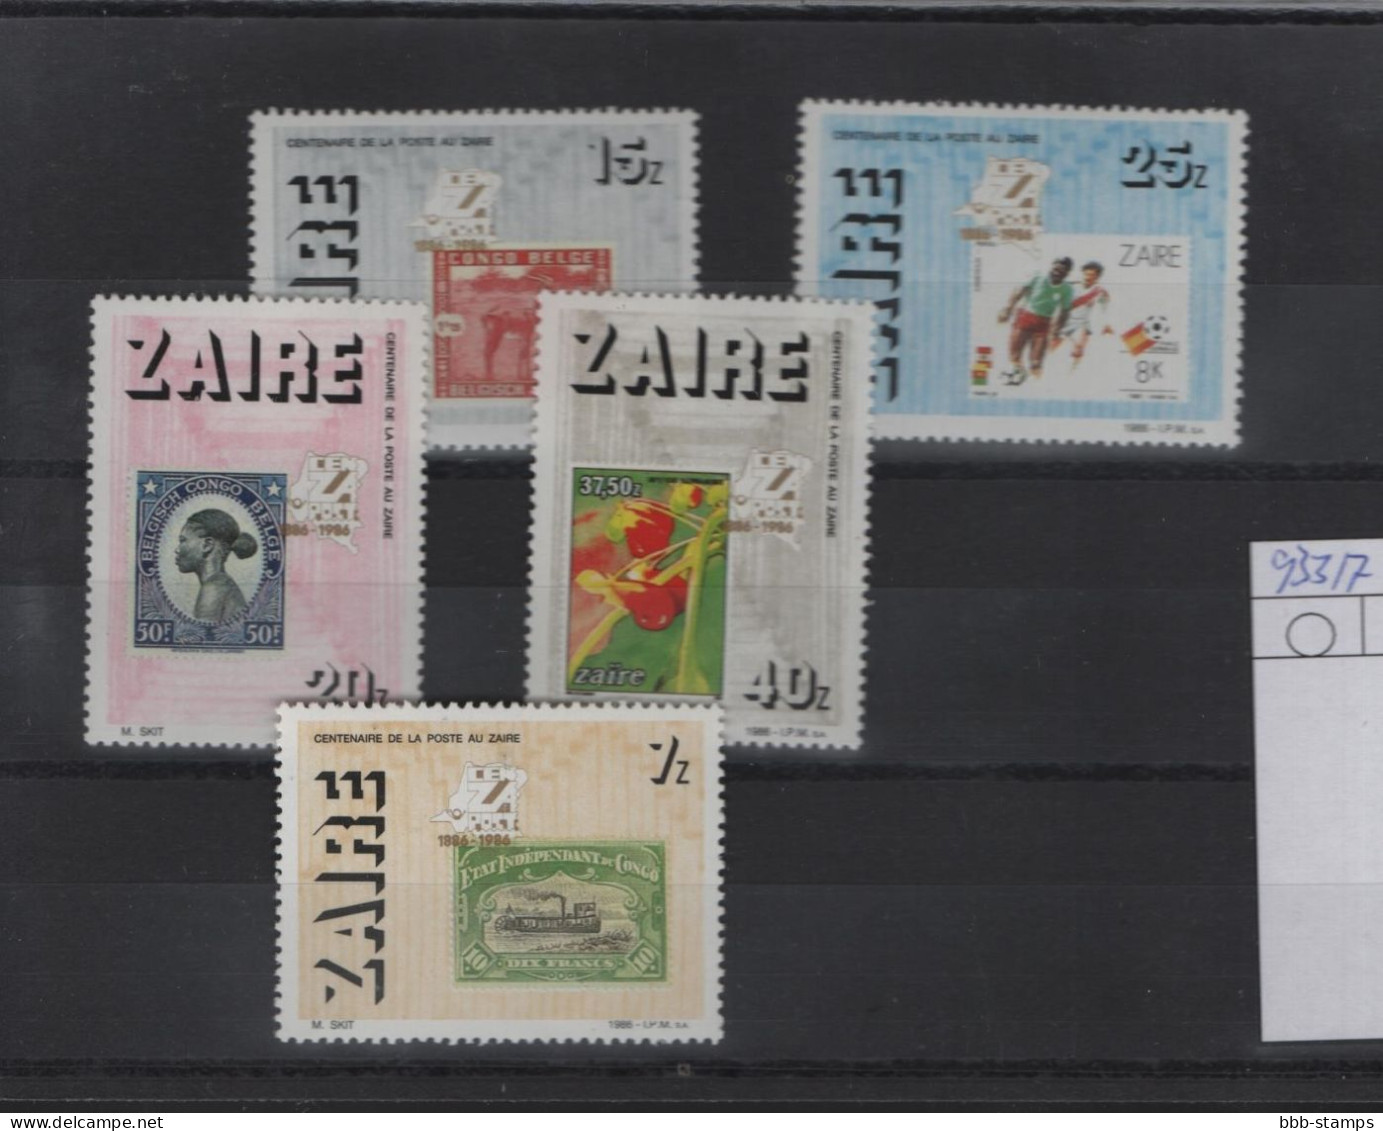 Kongo Kinshasa Michel Cat.No. Mnh/** 933/937 - Unused Stamps